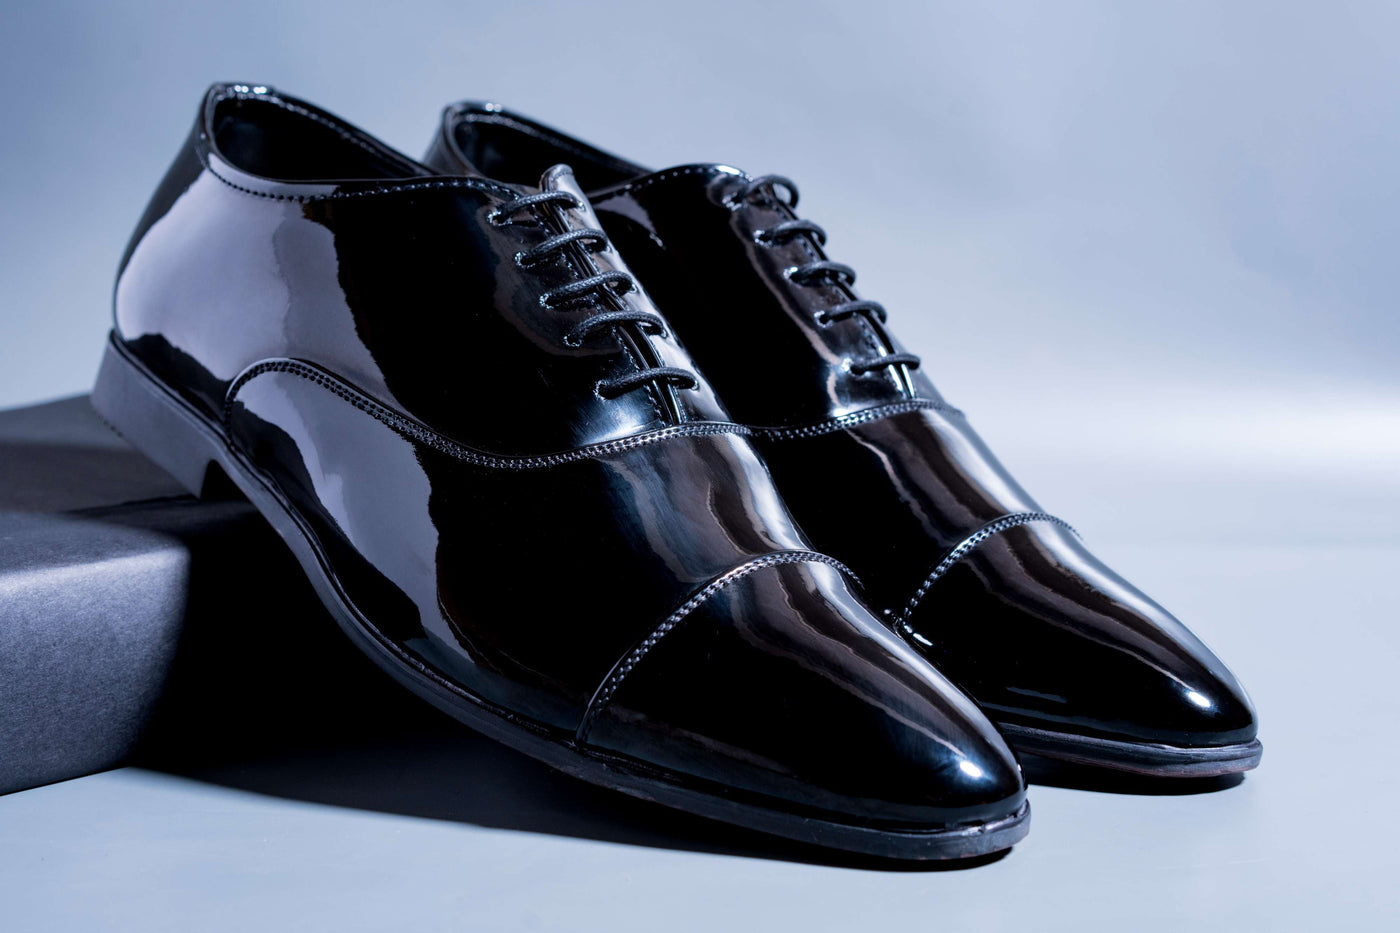 Shiny Black Men's Wear Pattern Premium Design Quality Oxford Formal Shoes-Unique and Classy